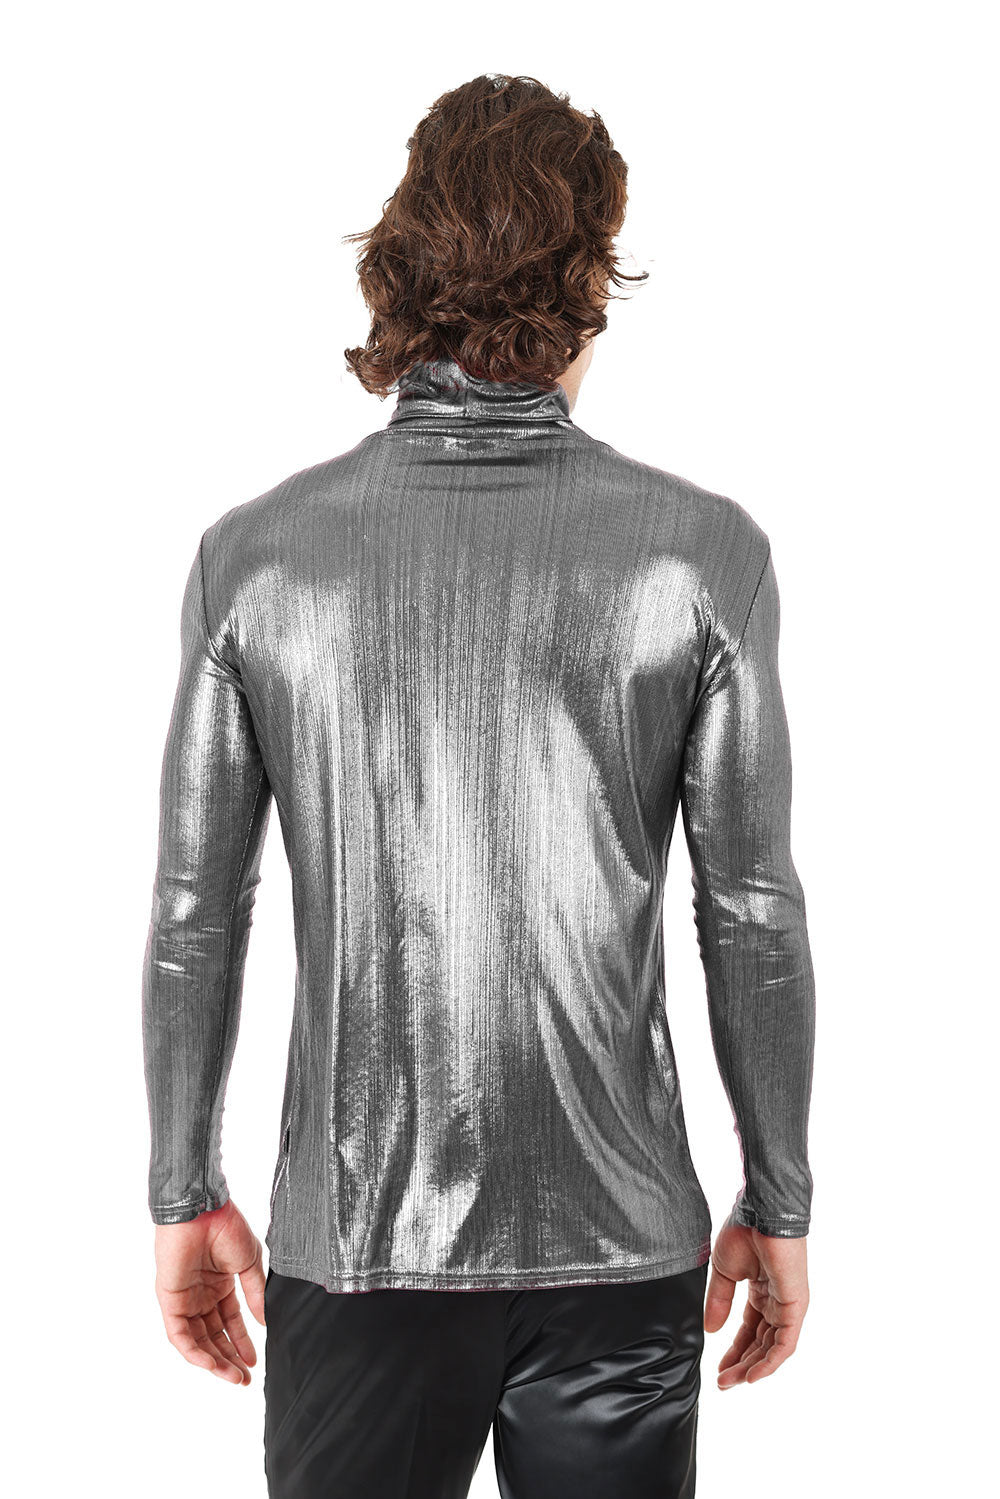 Barabas Wholesale Men's Metallic Design Long Sleeve Shirt 2KT1000 Silver